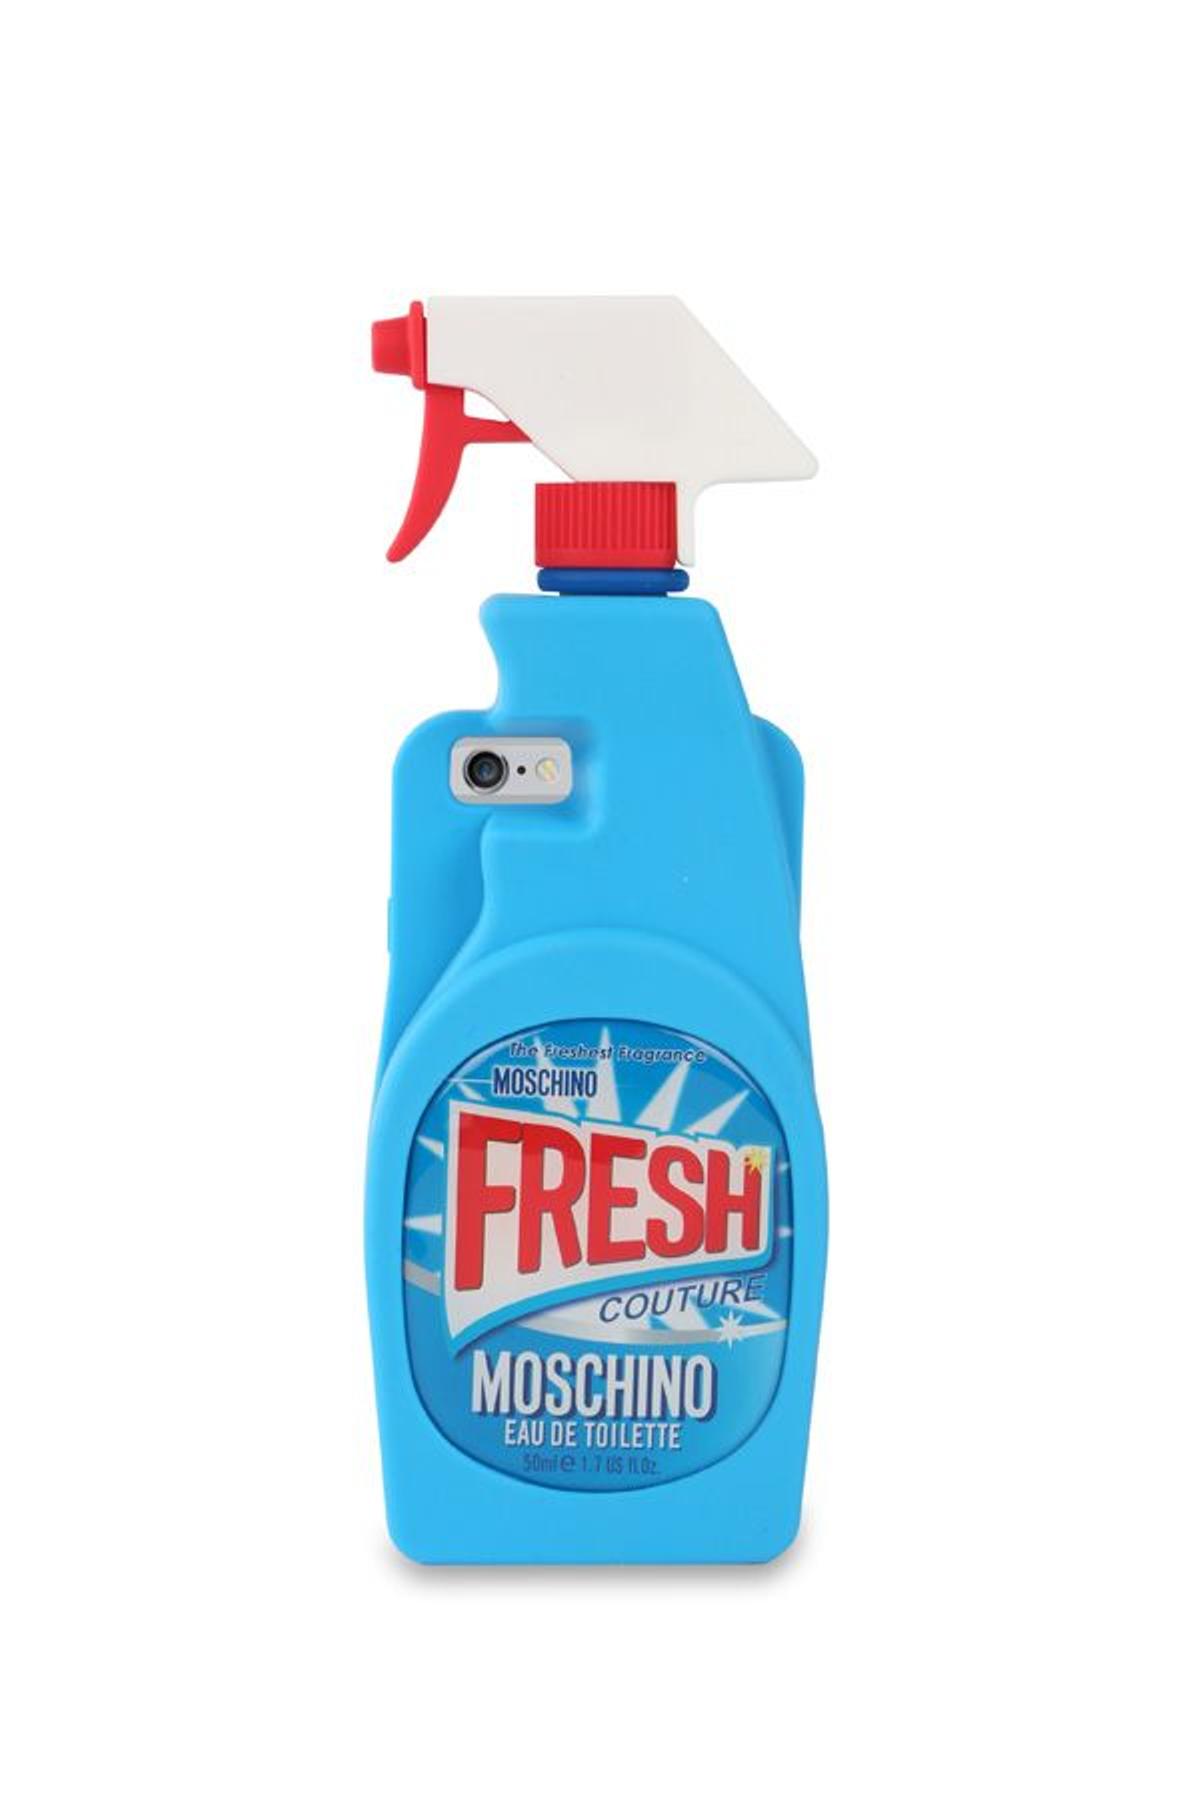 Funda para el móvil Moschino Fresh